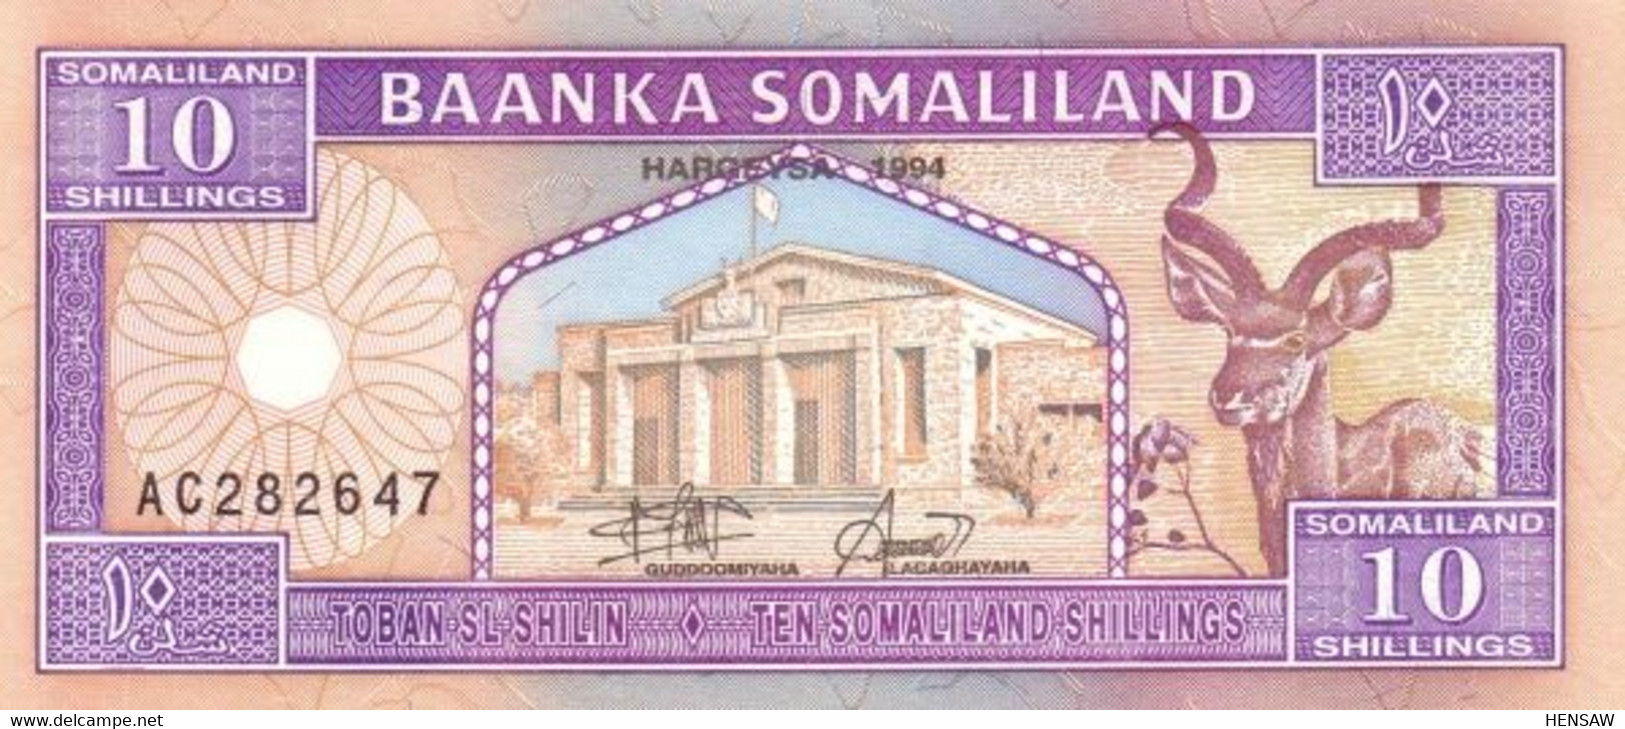 SOMALILAND 10 SHILLINGS 1994 P 2a UNC SC NUEVO - Somalie